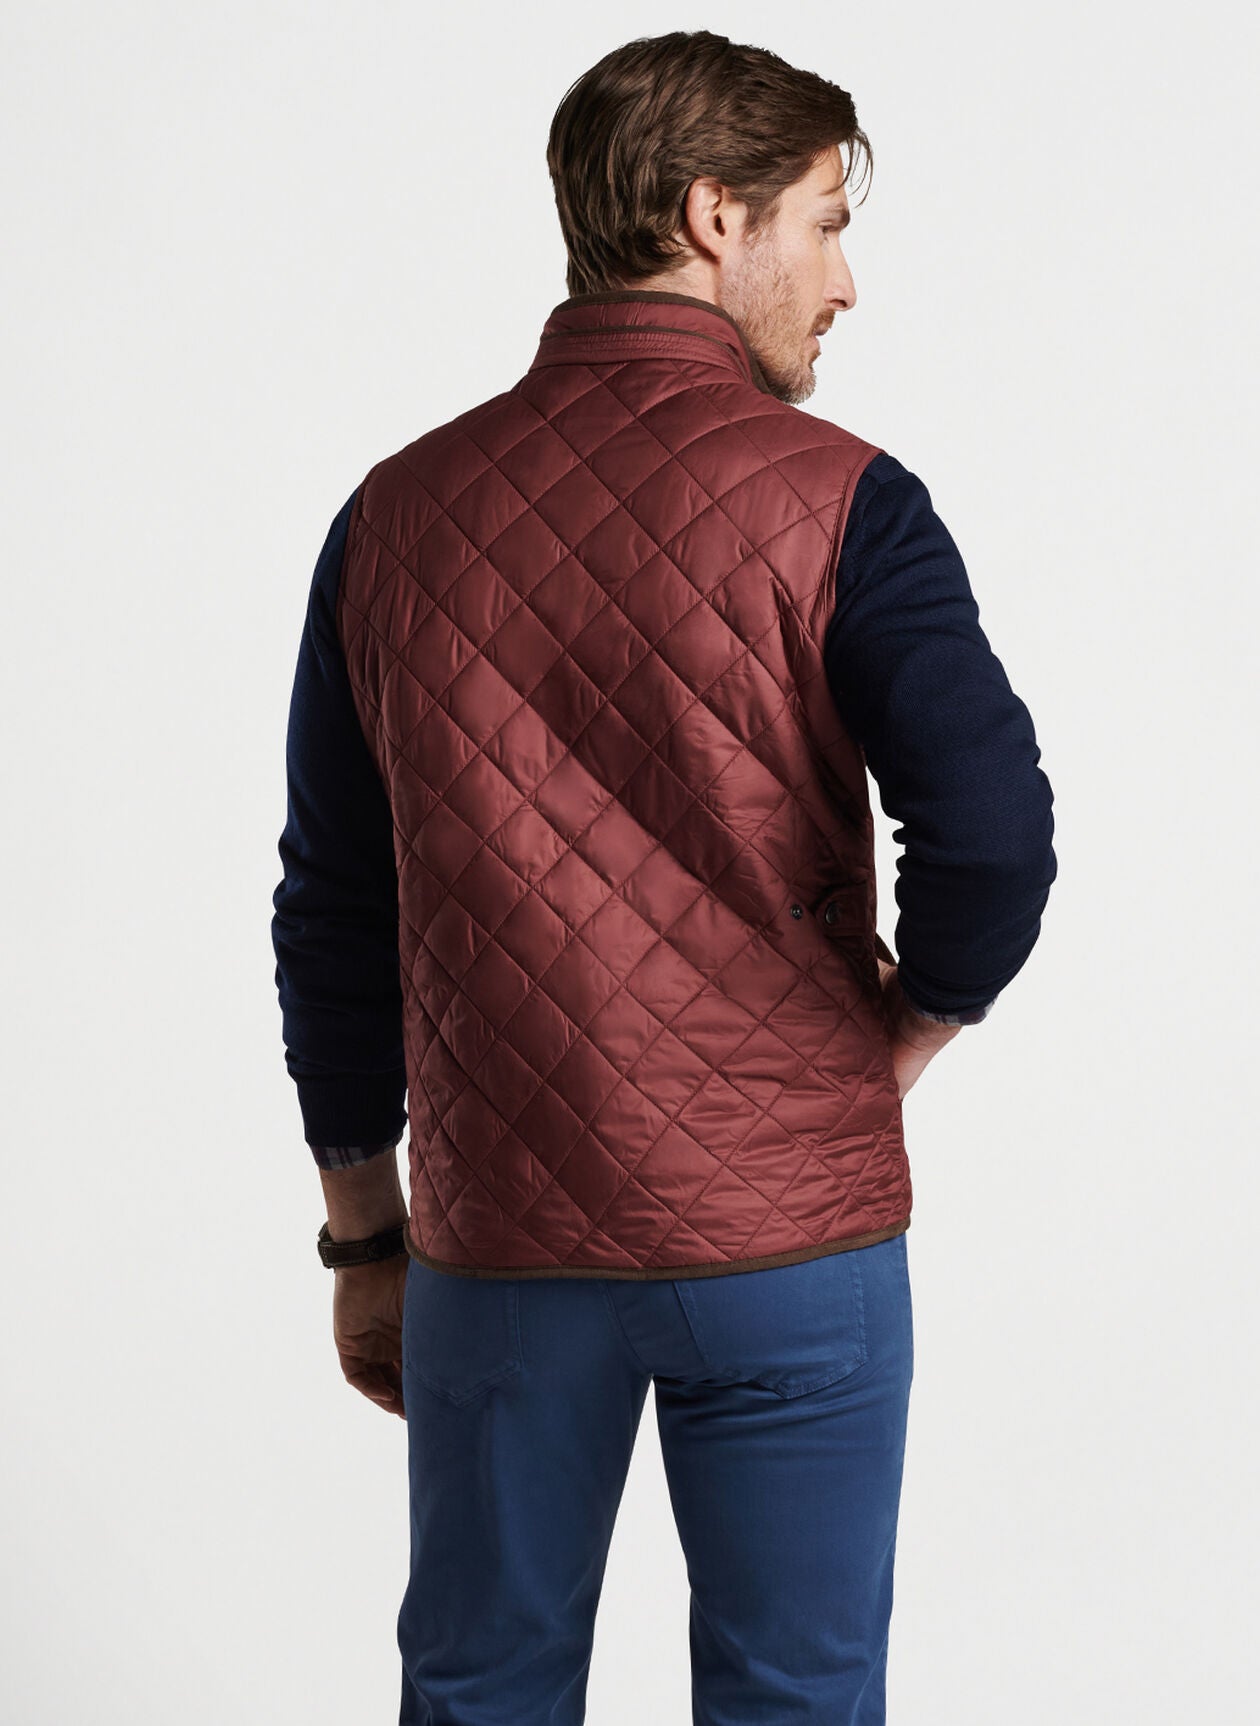 PETER MILLAR Men's Jackets CRANBERRY / M Peter Millar Essex Quilted Travel Vest || David's Clothing MF23Z13C